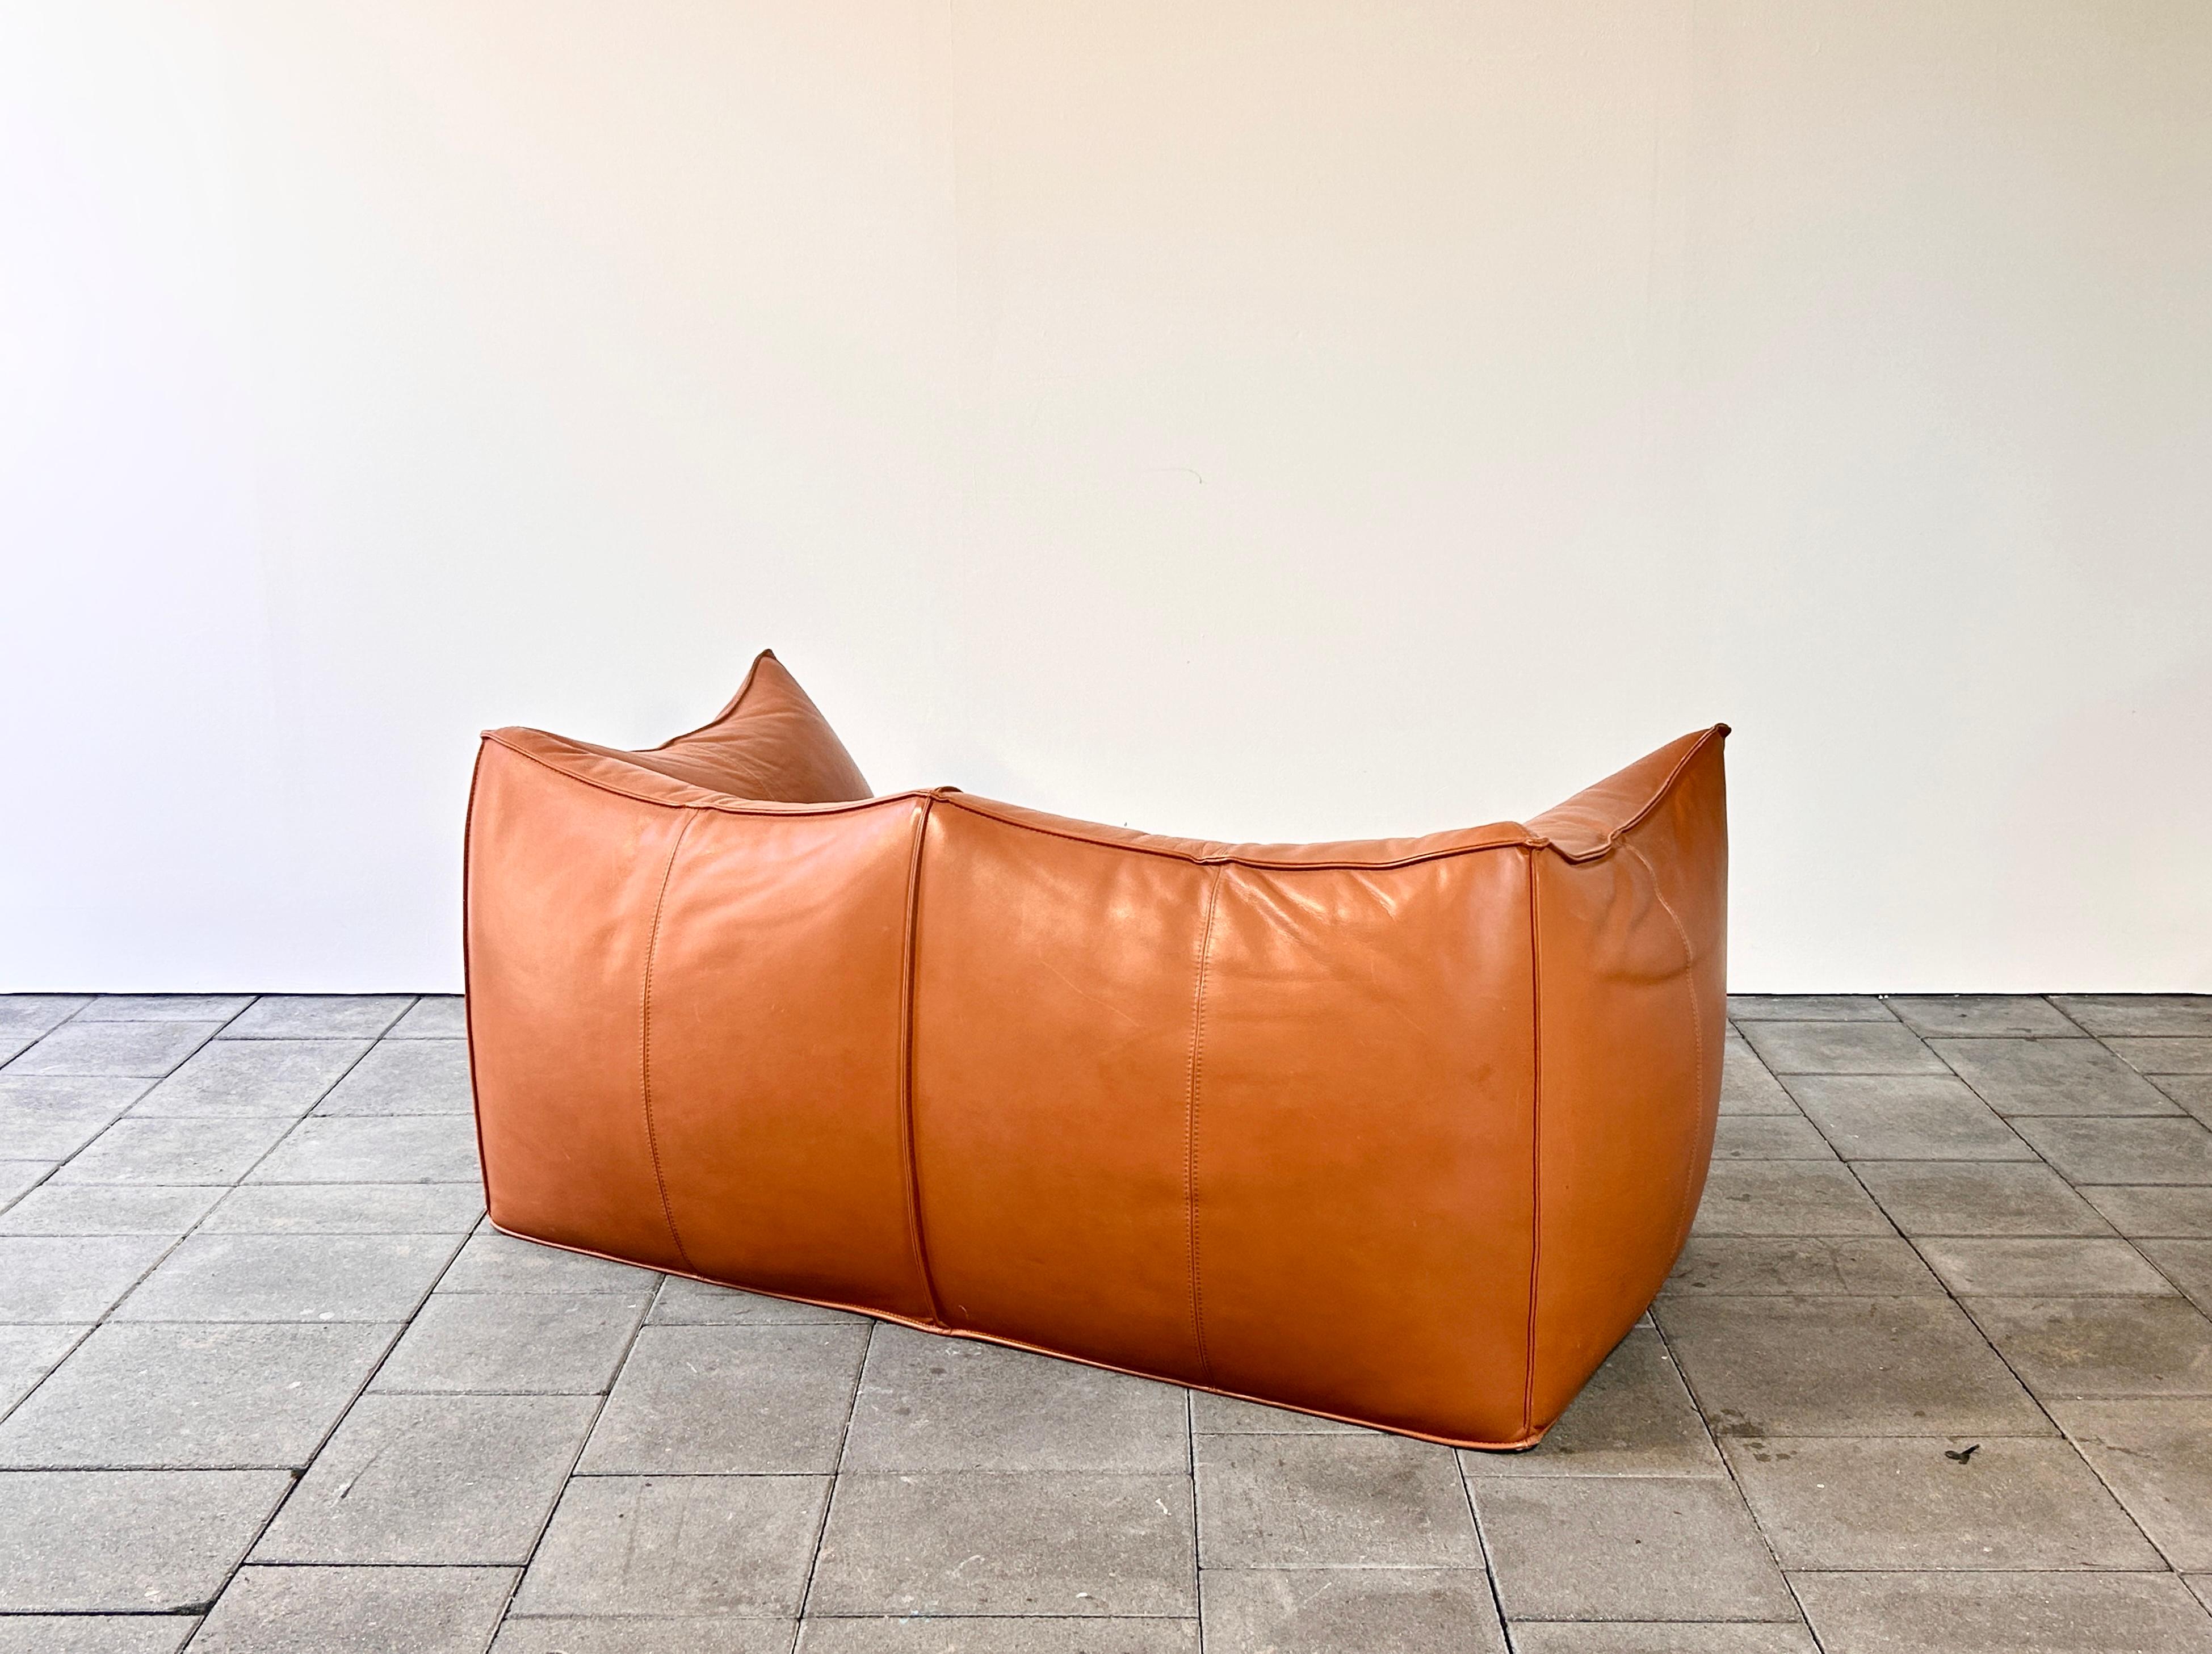 20th Century Le Bambole Leather Sofa Design Mario Bellini 1978 for B&B Italia  For Sale